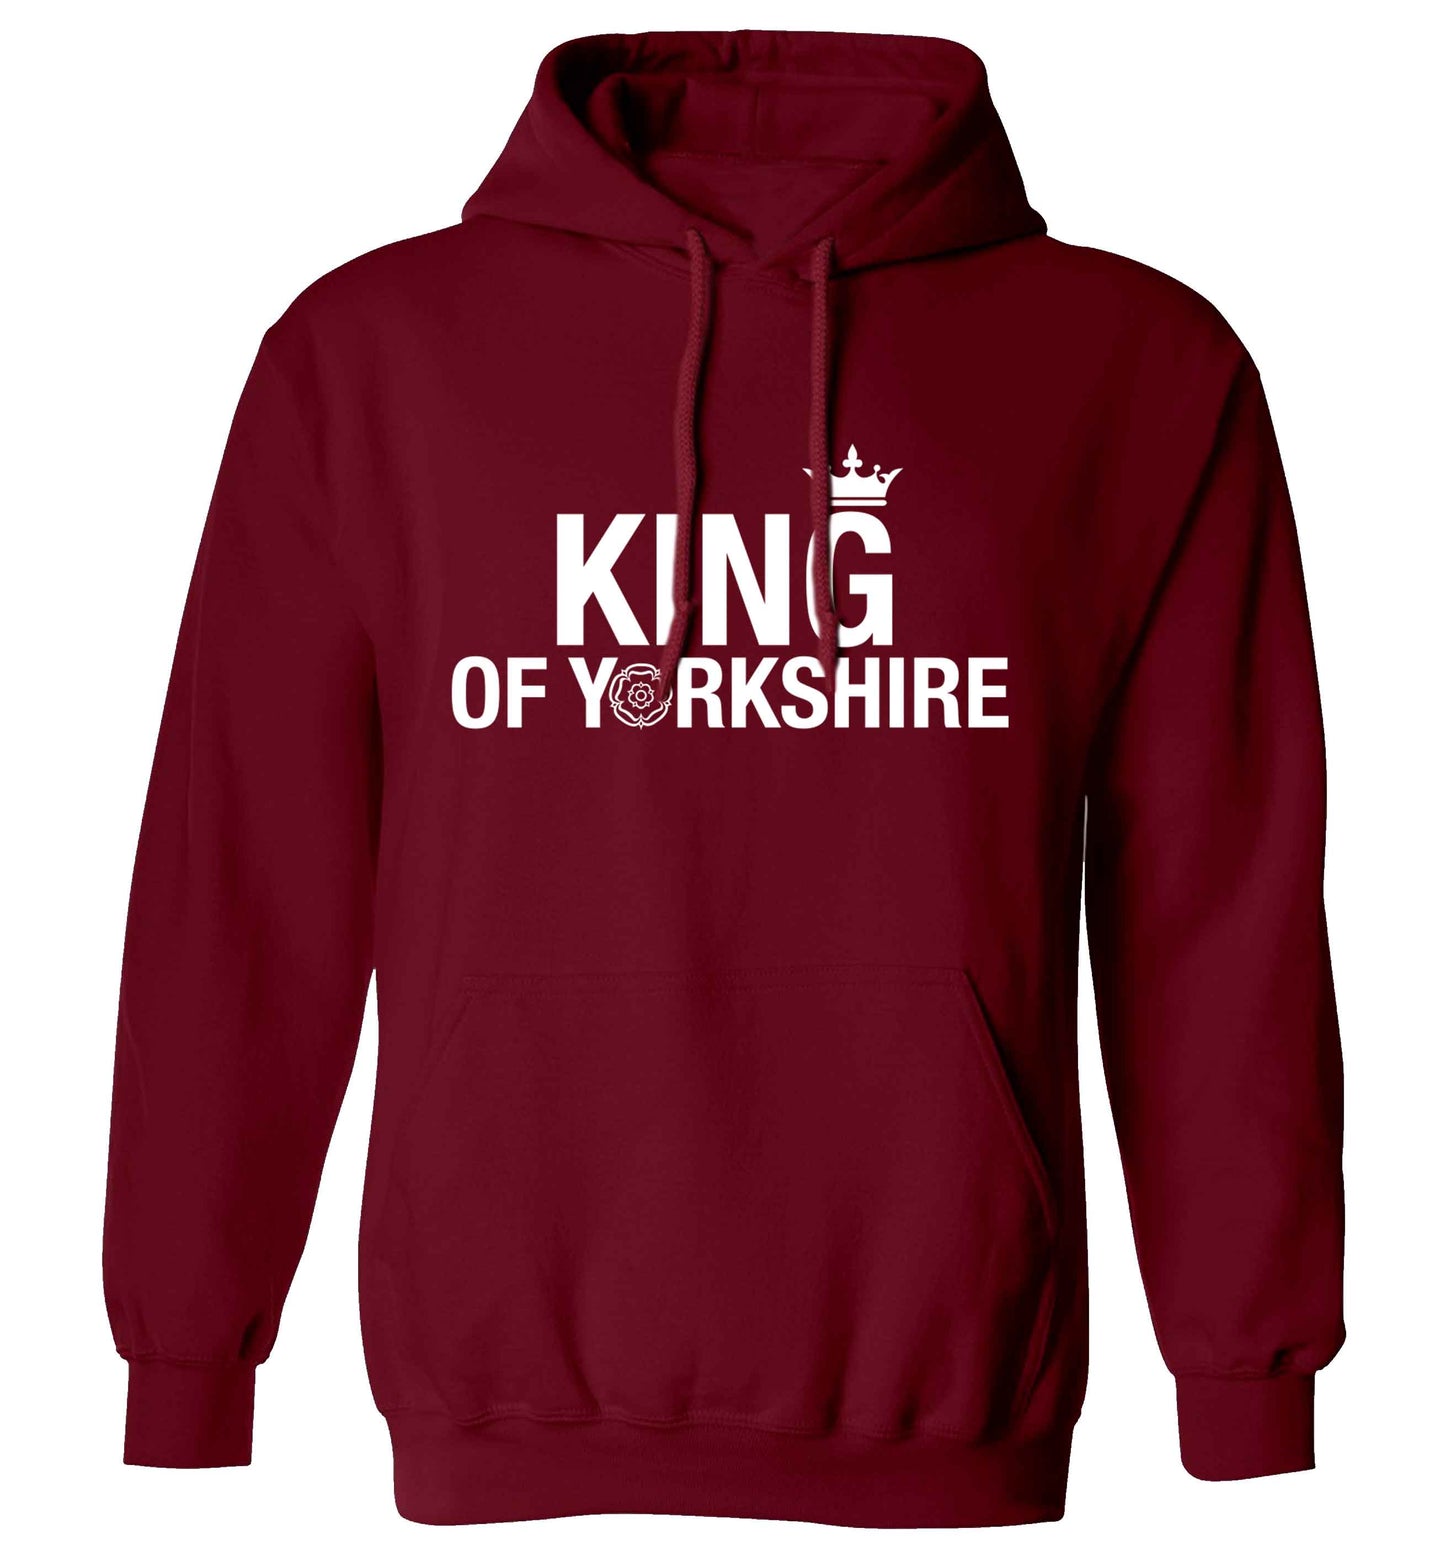 King of Yorkshire adults unisex maroon hoodie 2XL